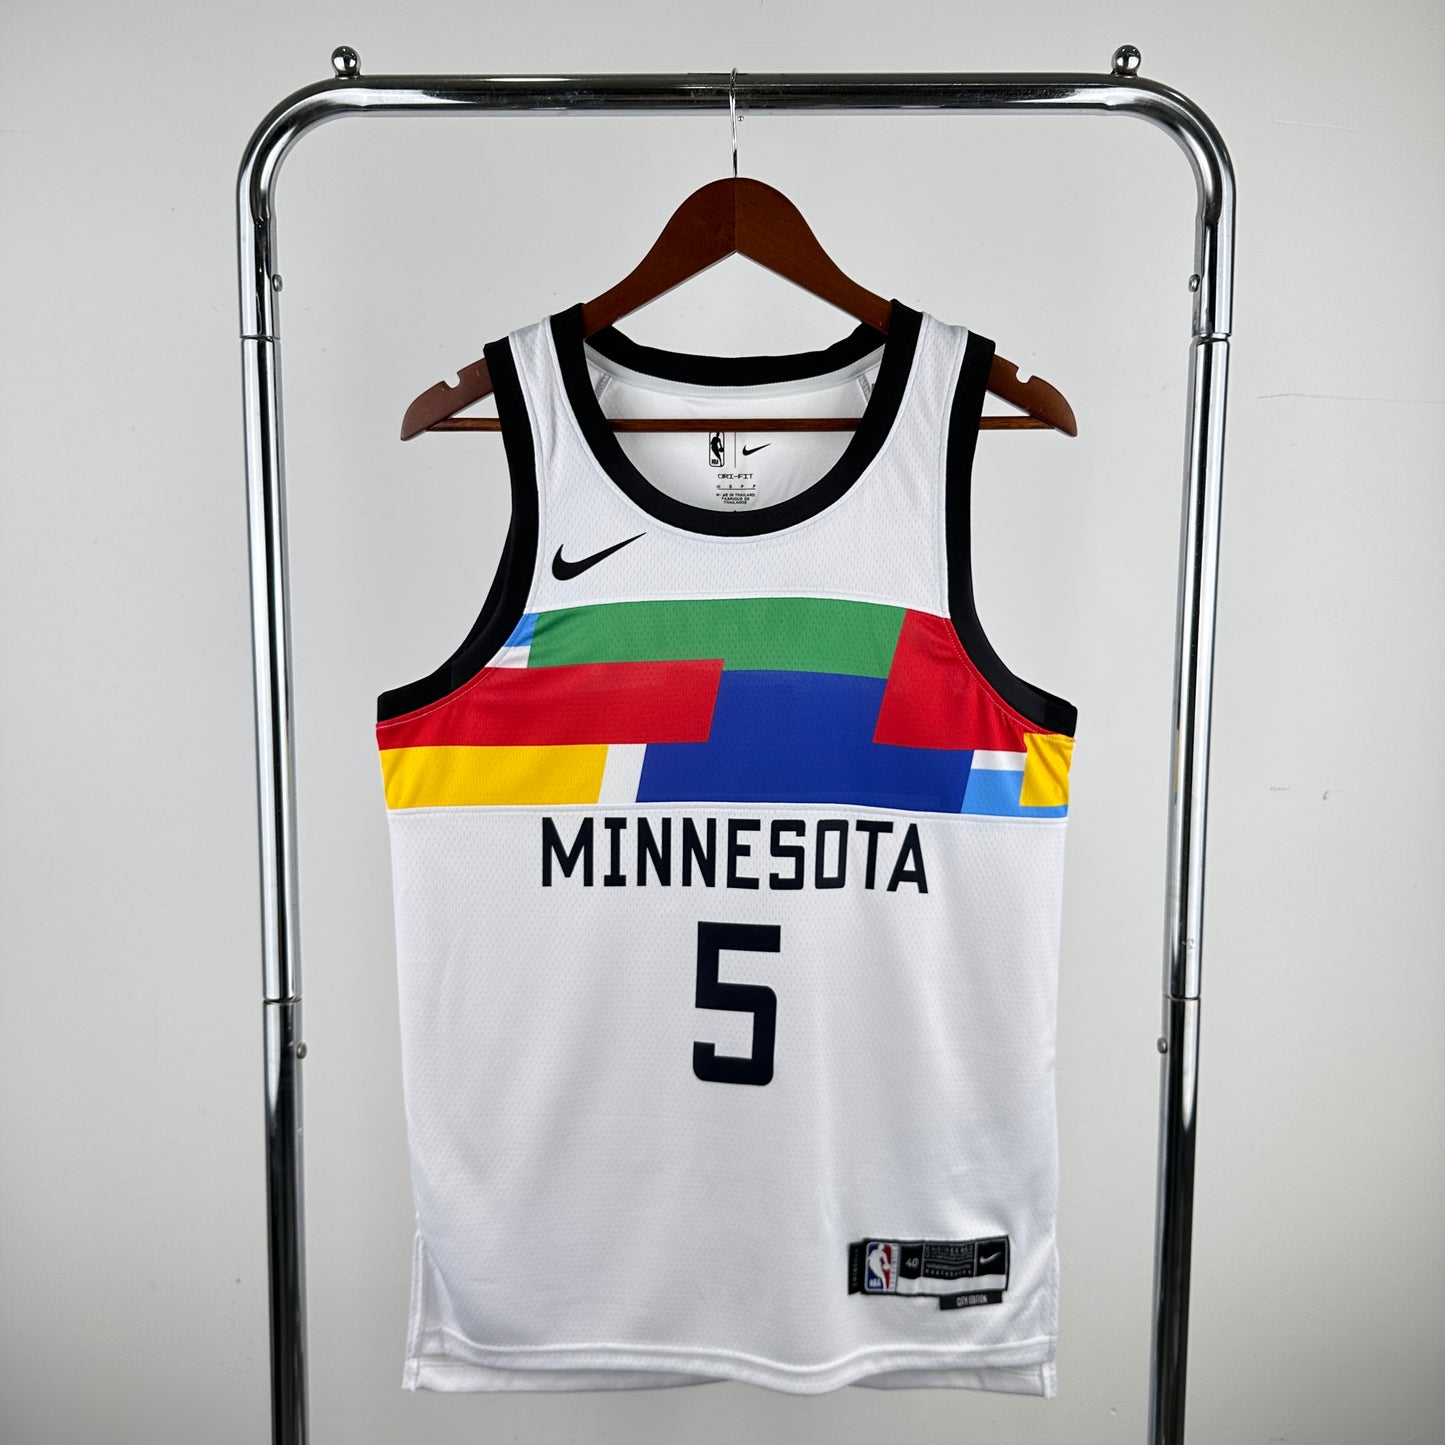 Anthony Edwards Minnesota Timberwolves 2022/23 Nike City Edition NBA Swingman Jersey - White